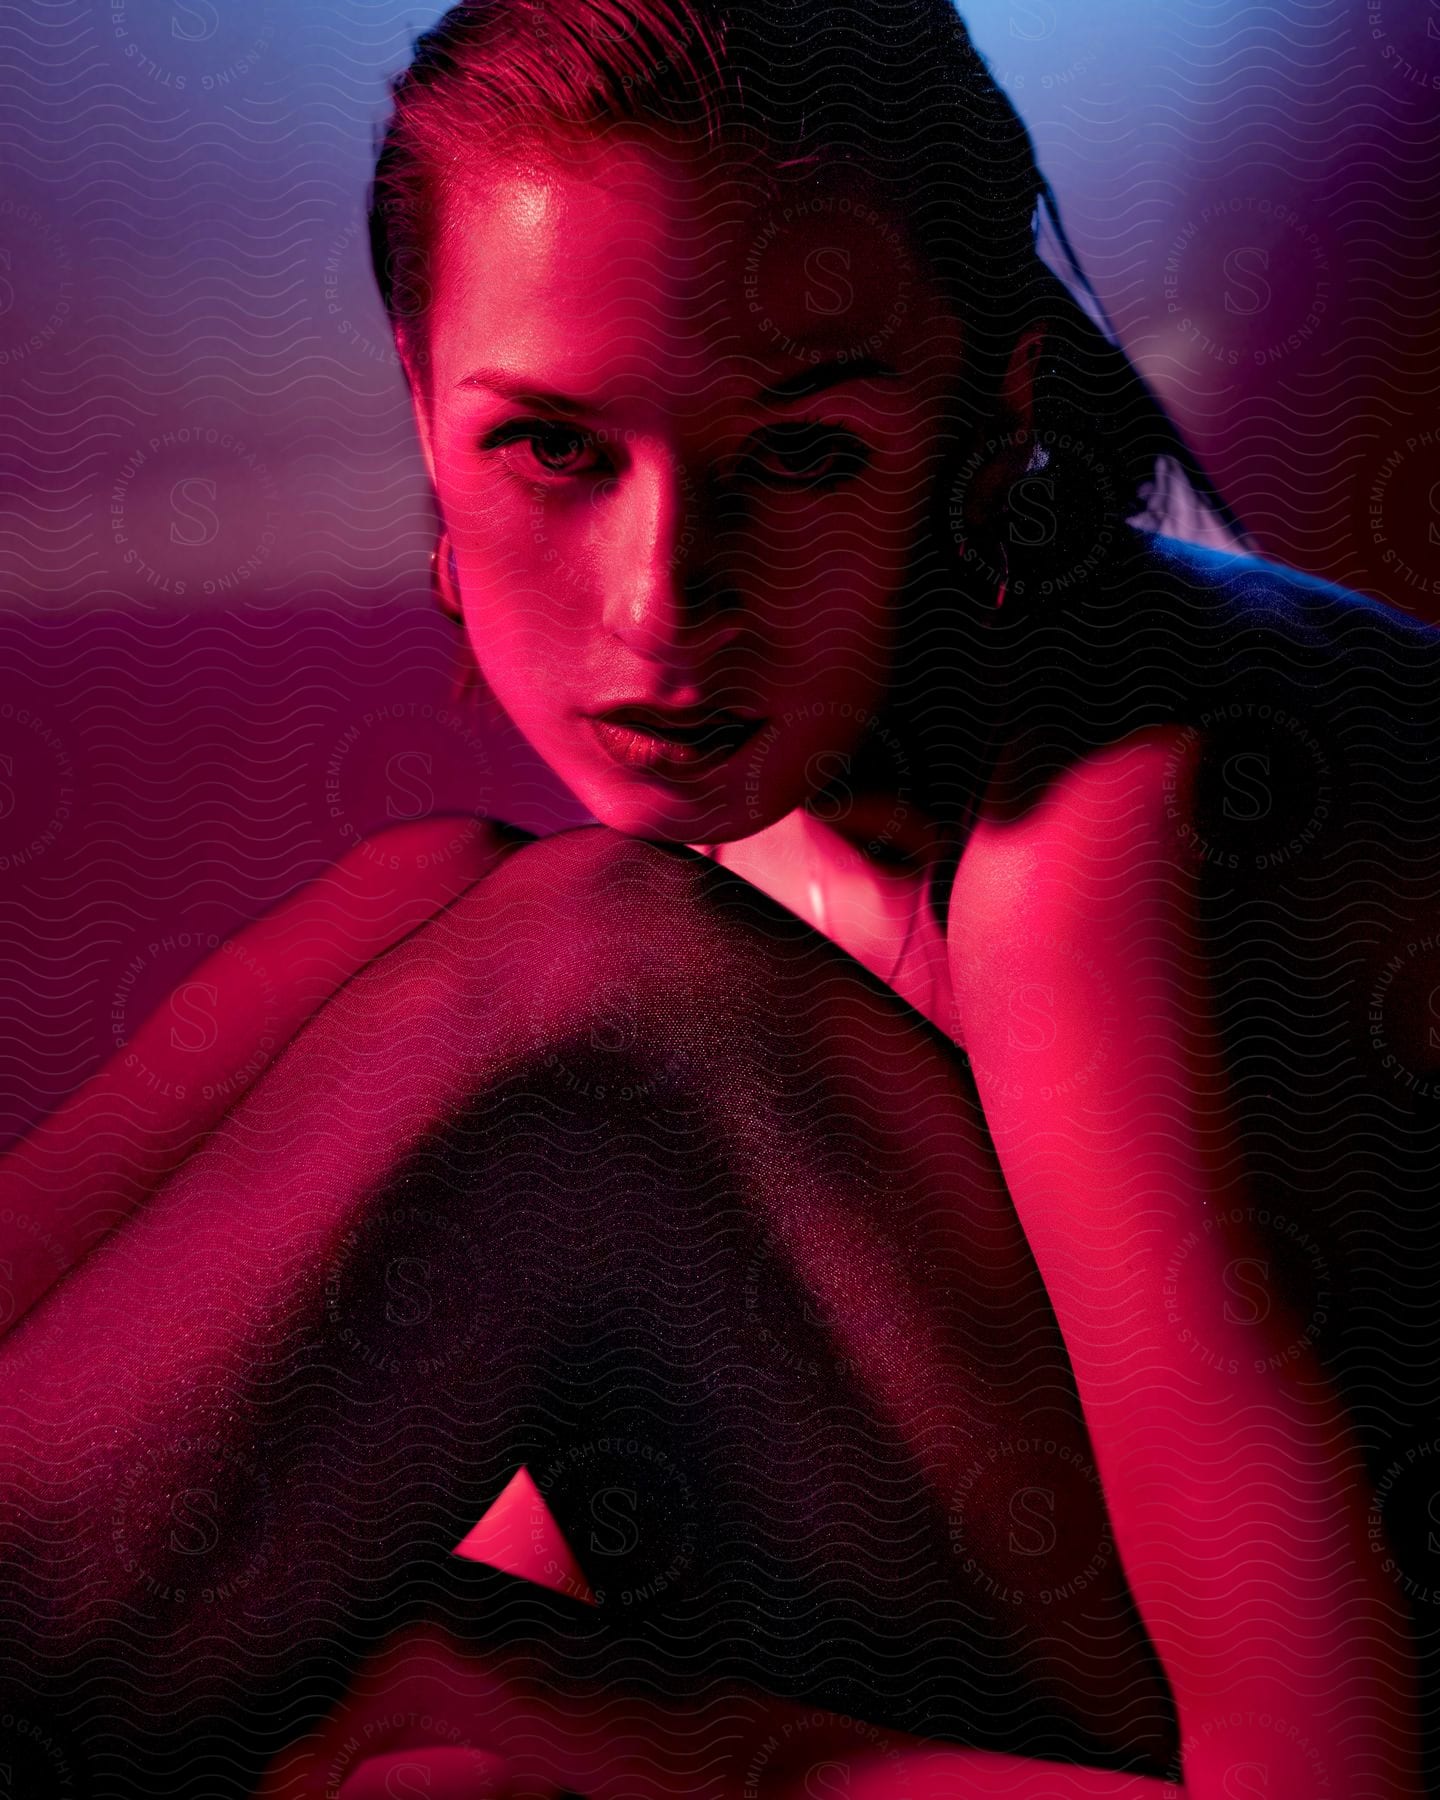 Stock photo of female models posed chin on knee under red studio lighting